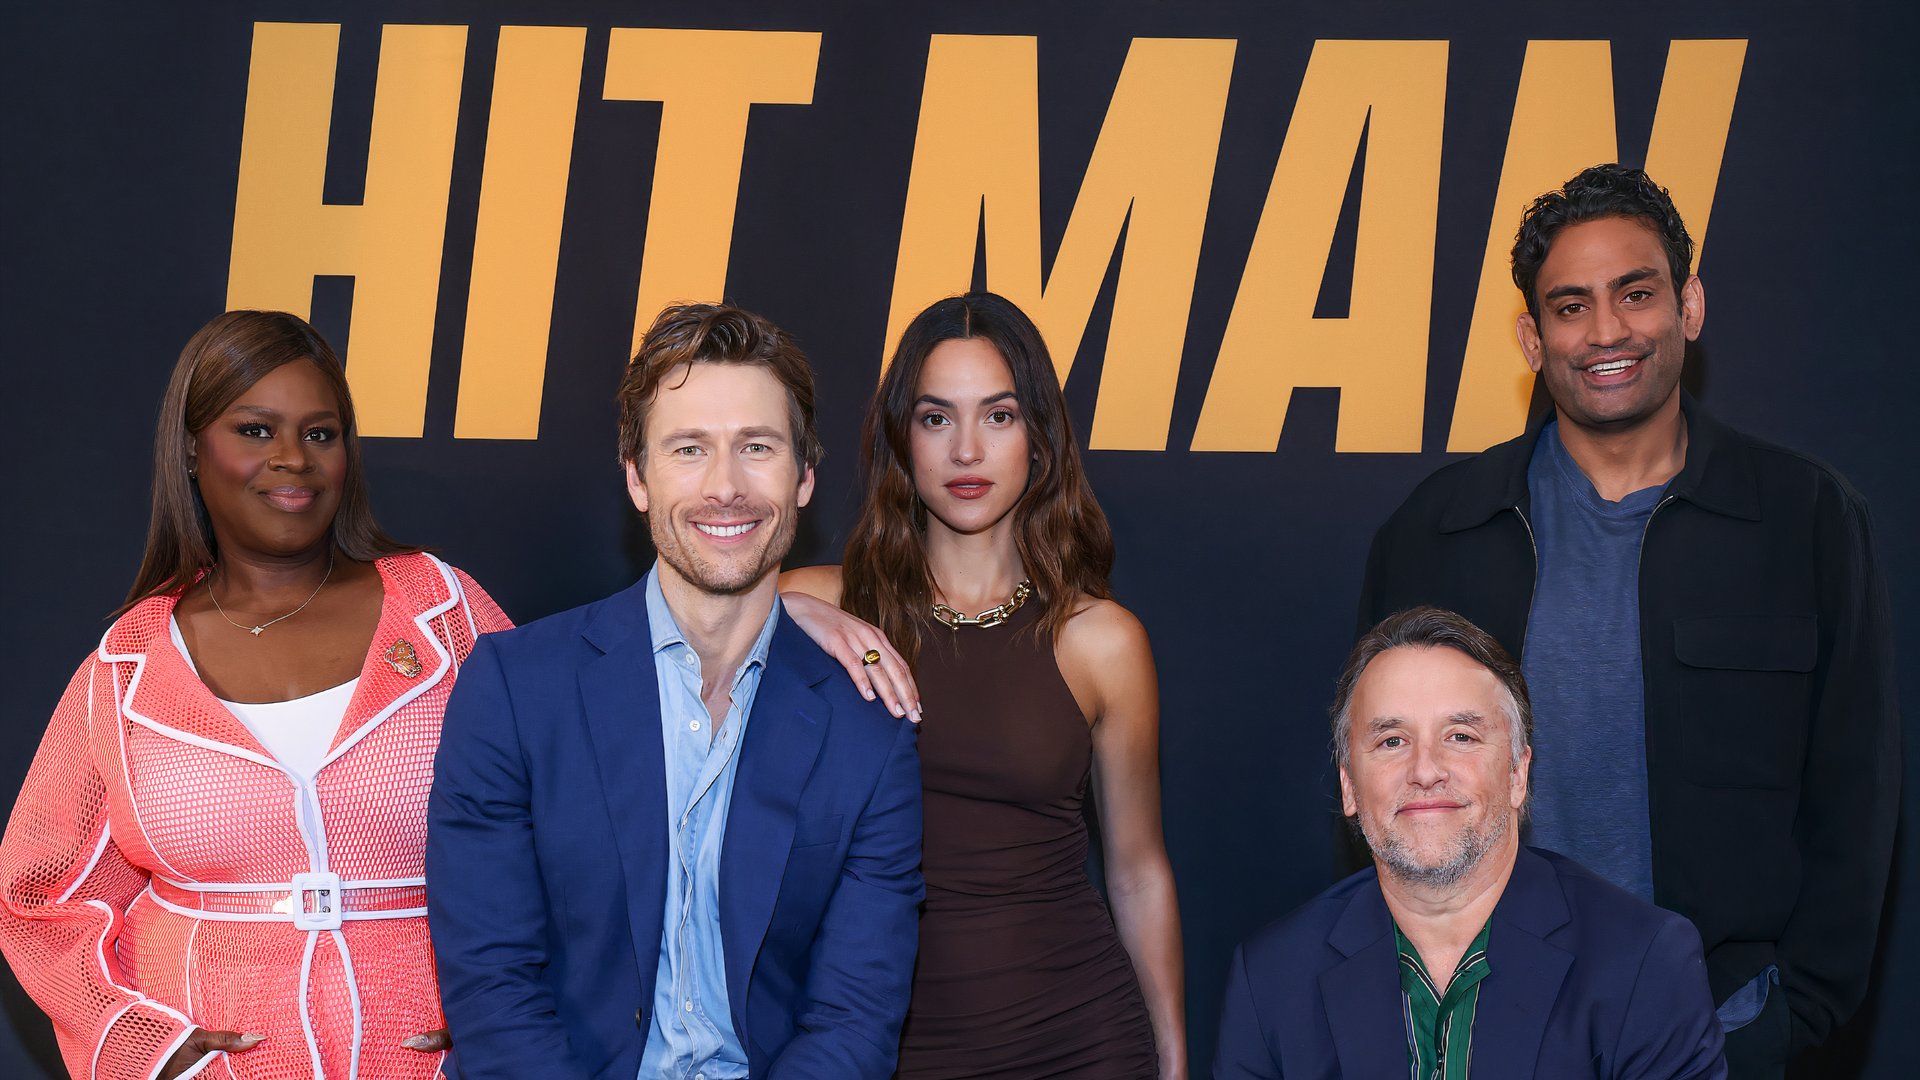 The cast of Hit Man on Netflix with Richard Linklater, Retta, Glen Powell, and Adria Arjona